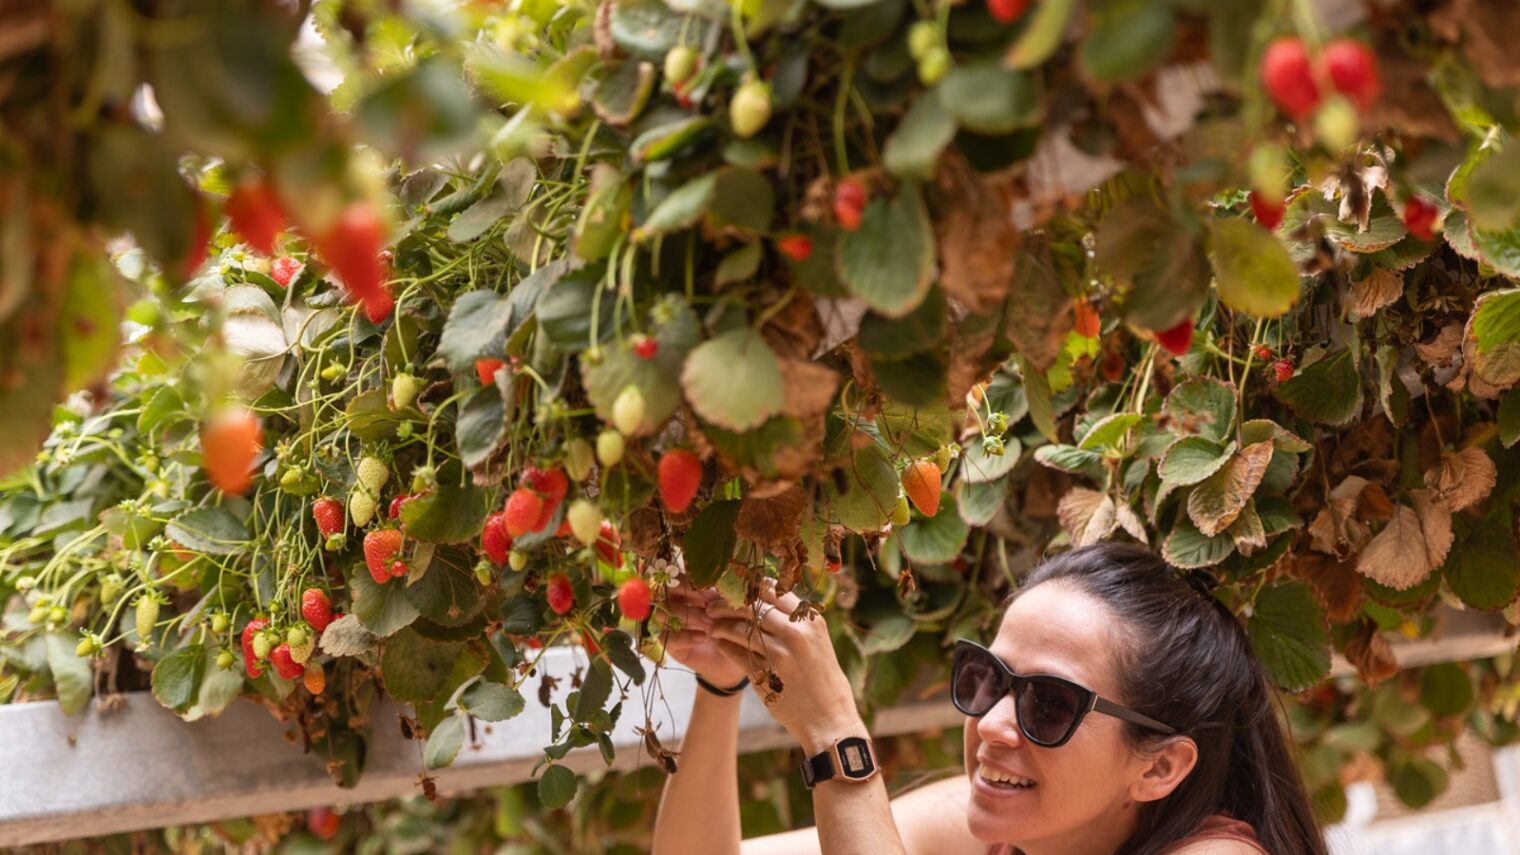 Tanya Pons Allon picking strawberries at Arava R&D Center. Photo by Laura Ben-David